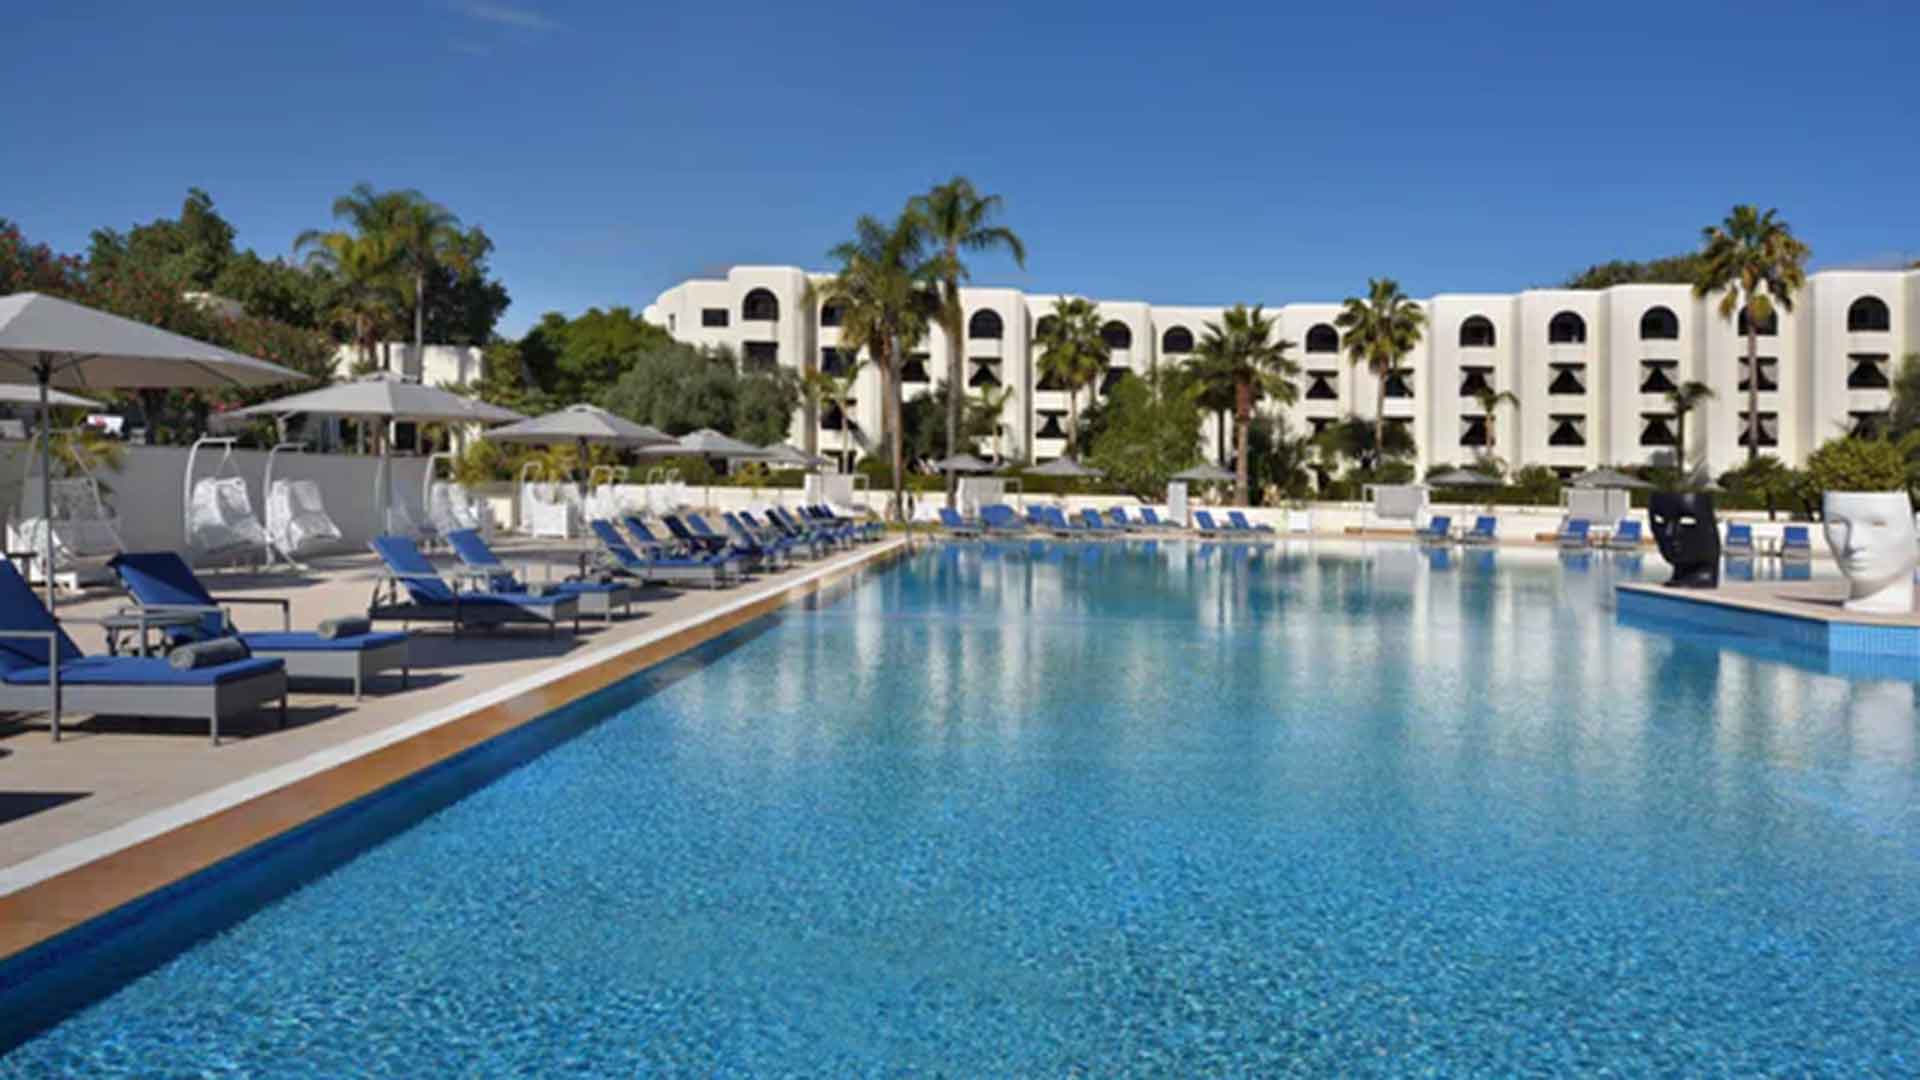 Fes-Marriott-Hotel-Jnan-Palace-pool